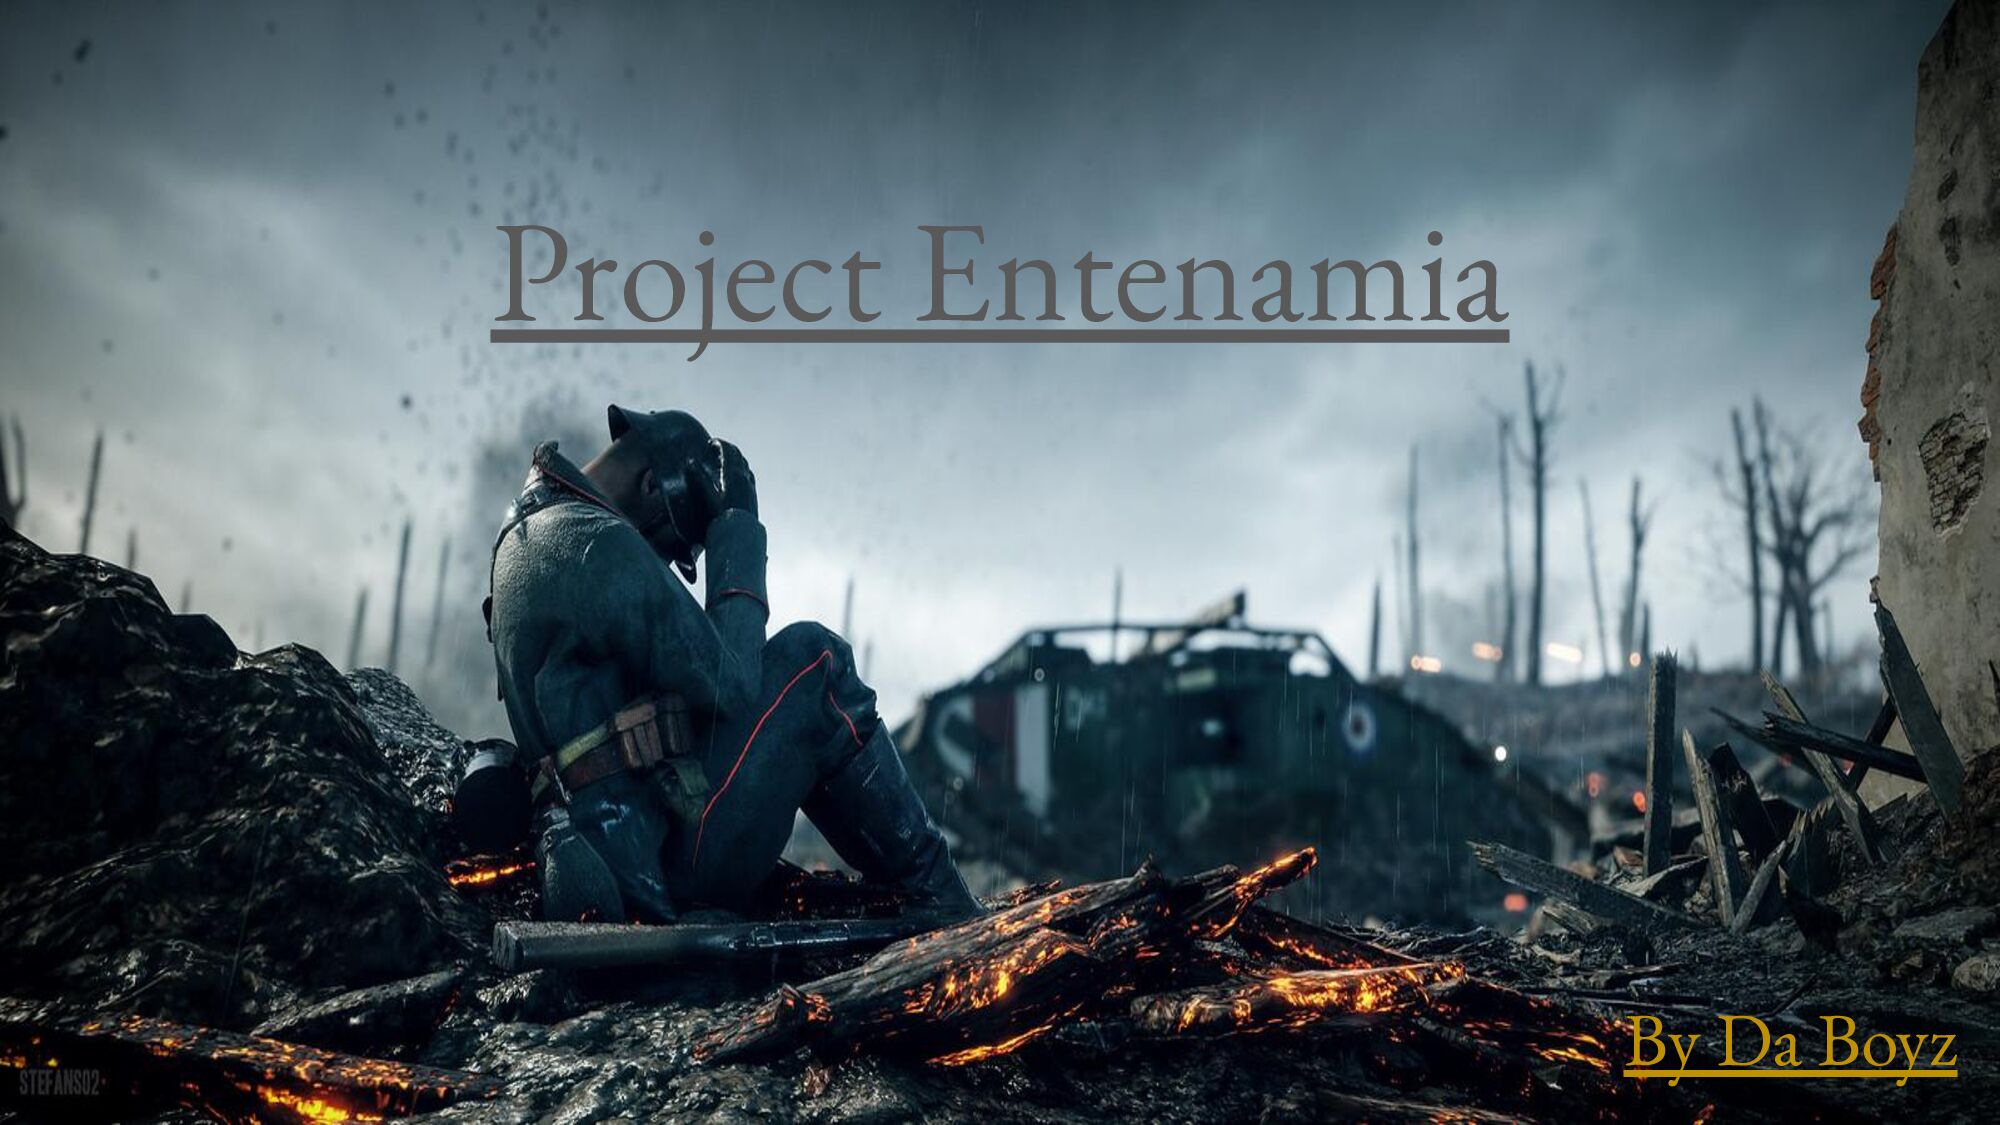 Project Entemania